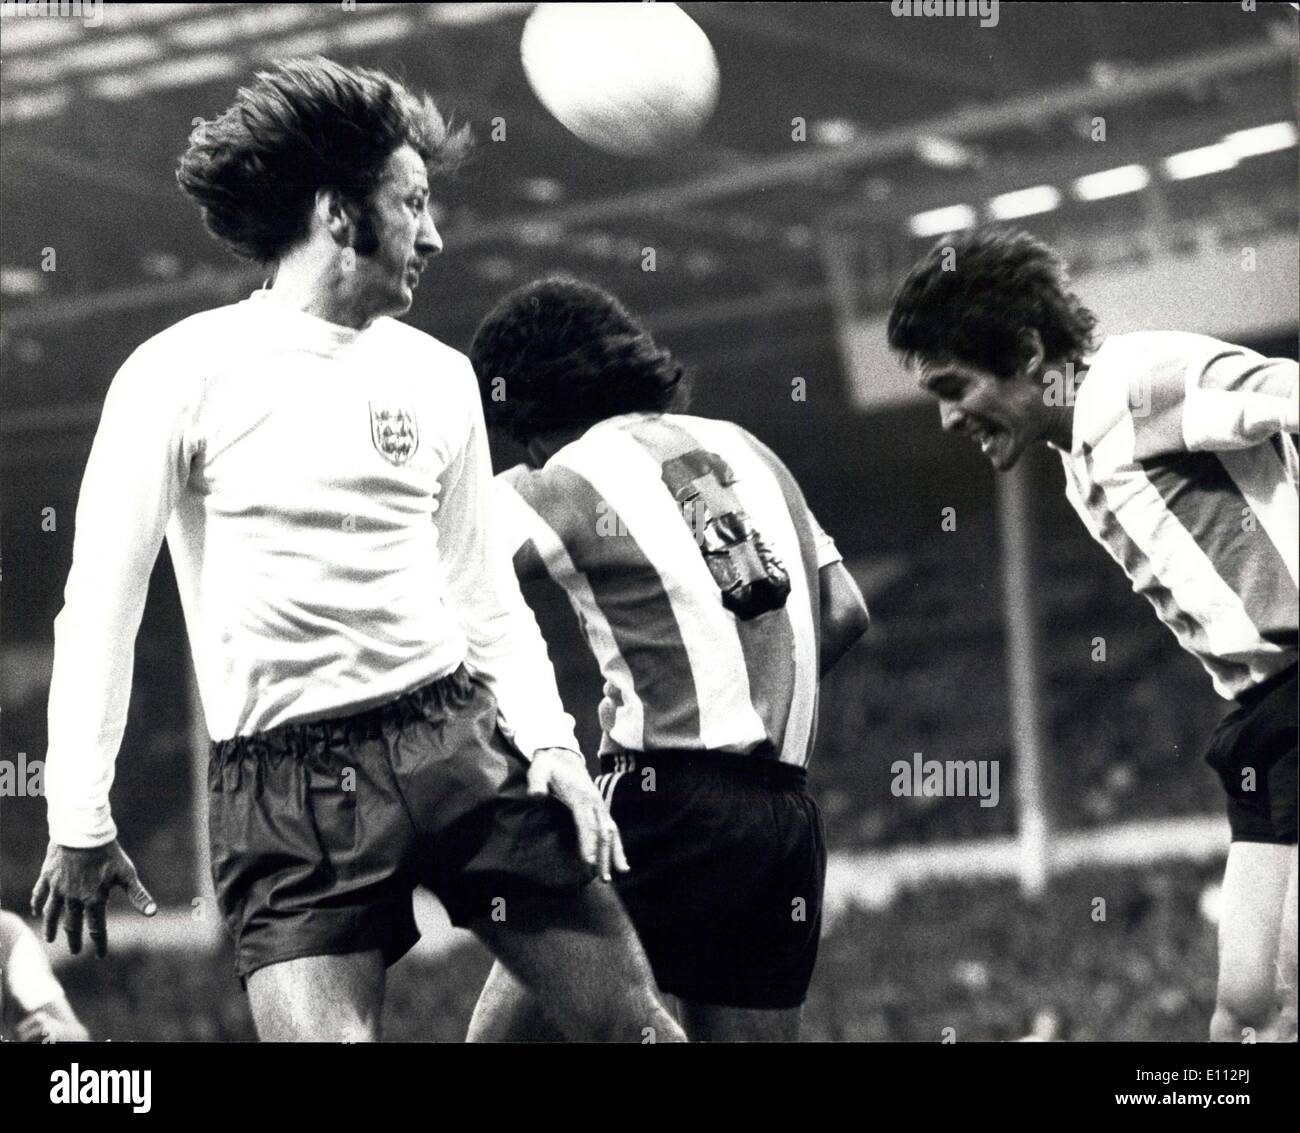 may-23-1975-international-soccer-match-at-wembley-england-v-argentina-e112pj.jpg